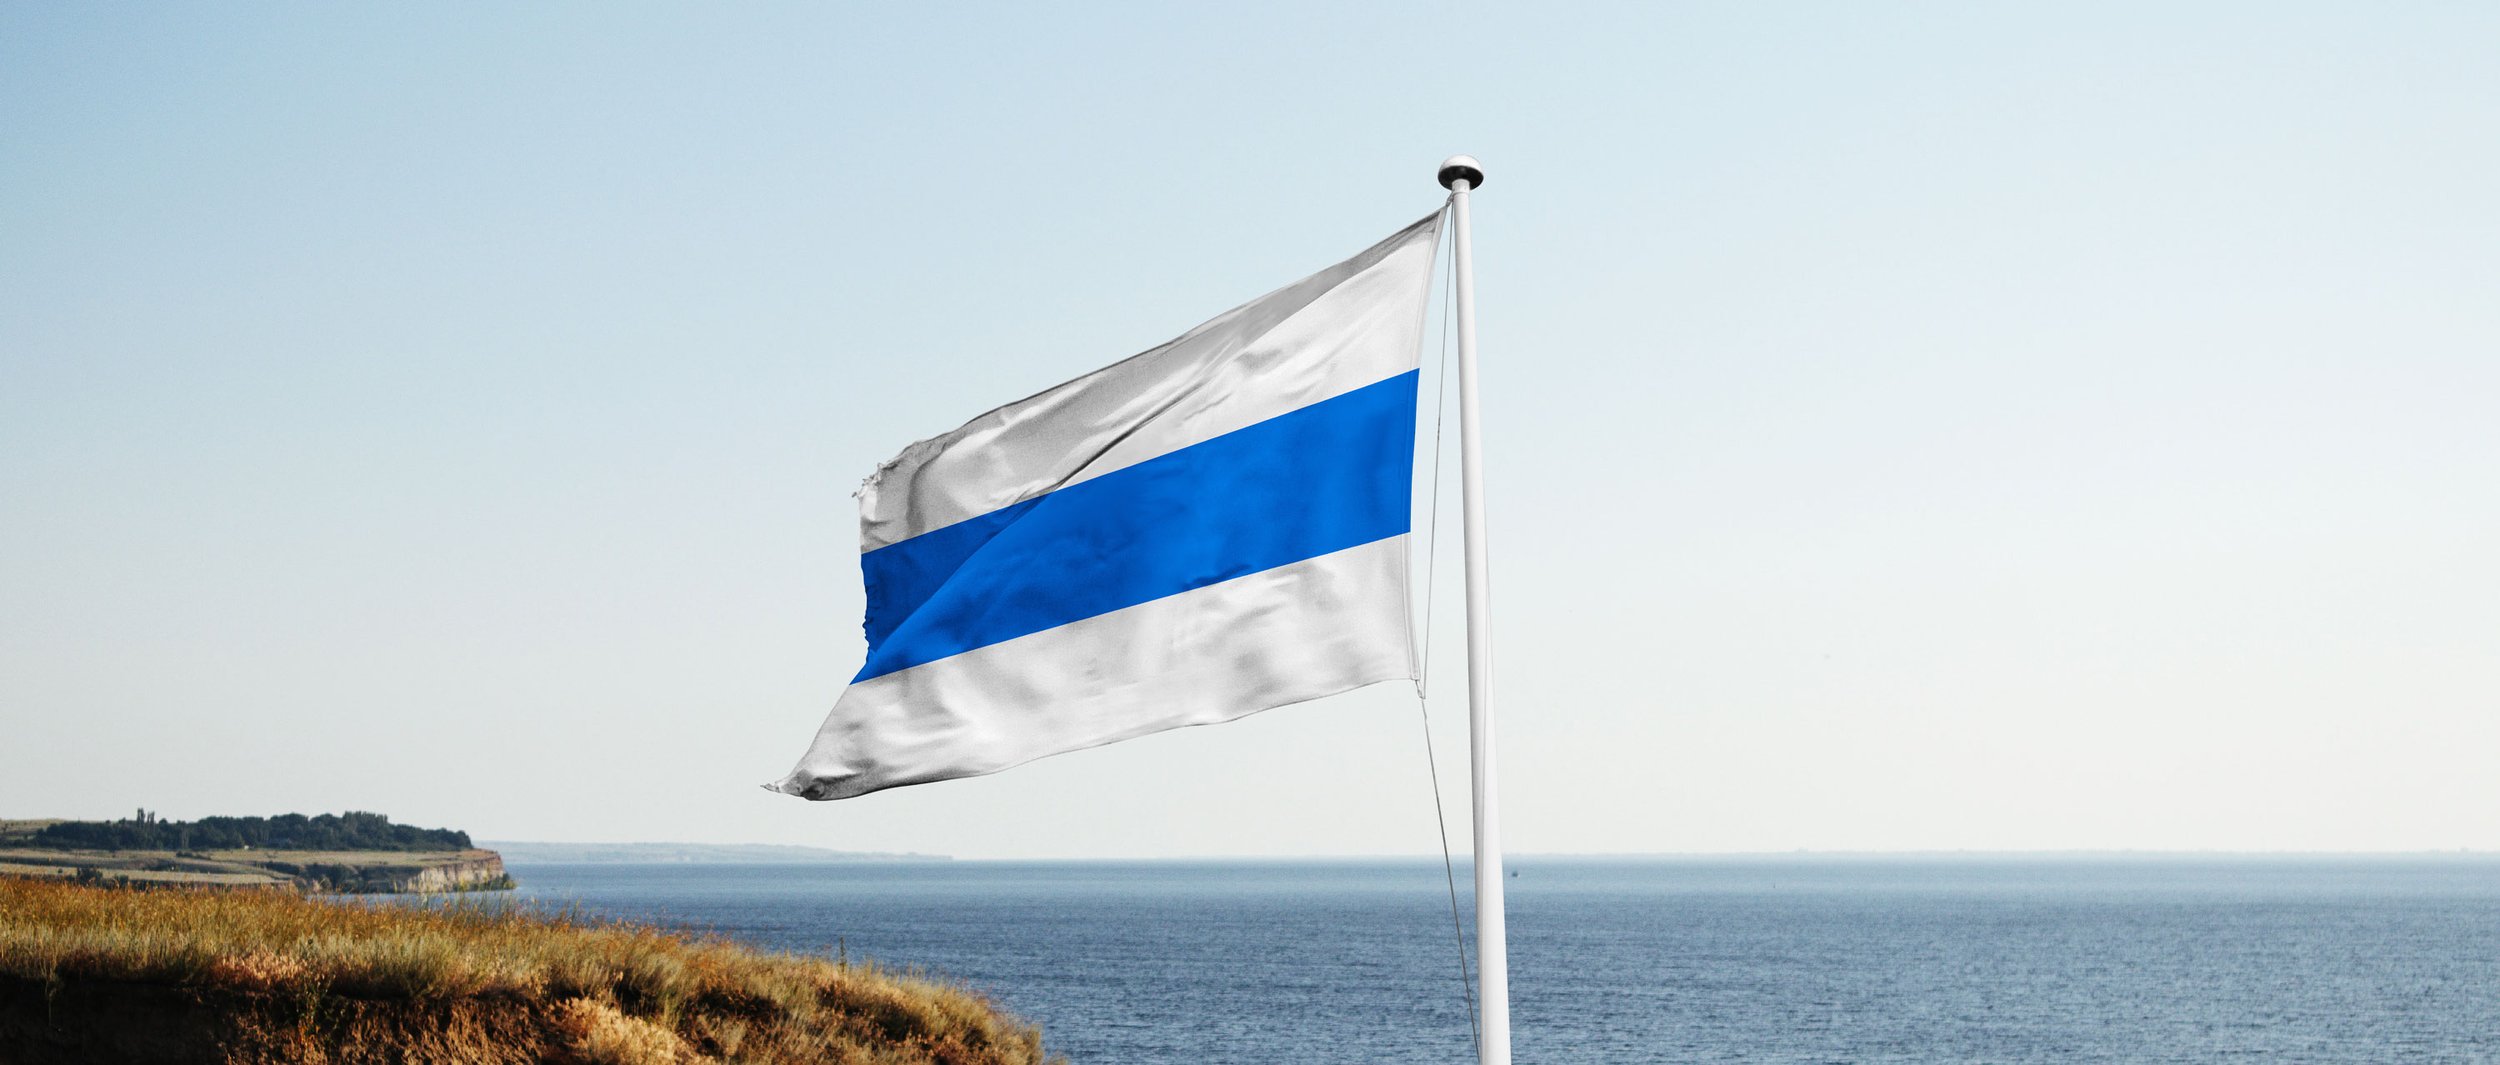 Russland Flagge weiß-blau-rot, Querformat, genäht, hochwertig